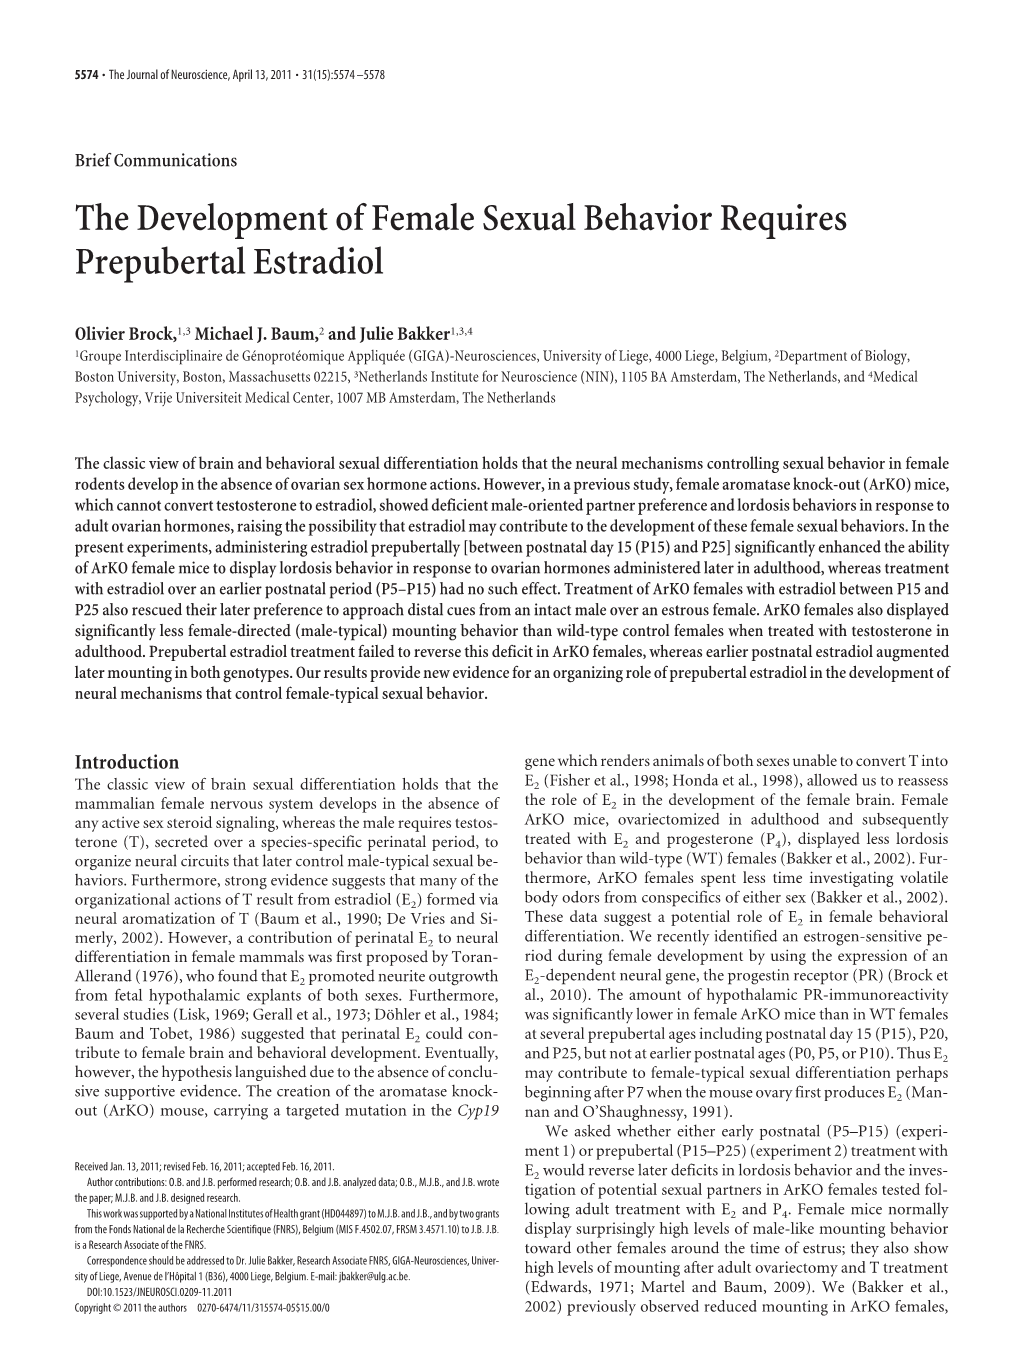 The Development of Female Sexual Behavior Requires Prepubertal Estradiol